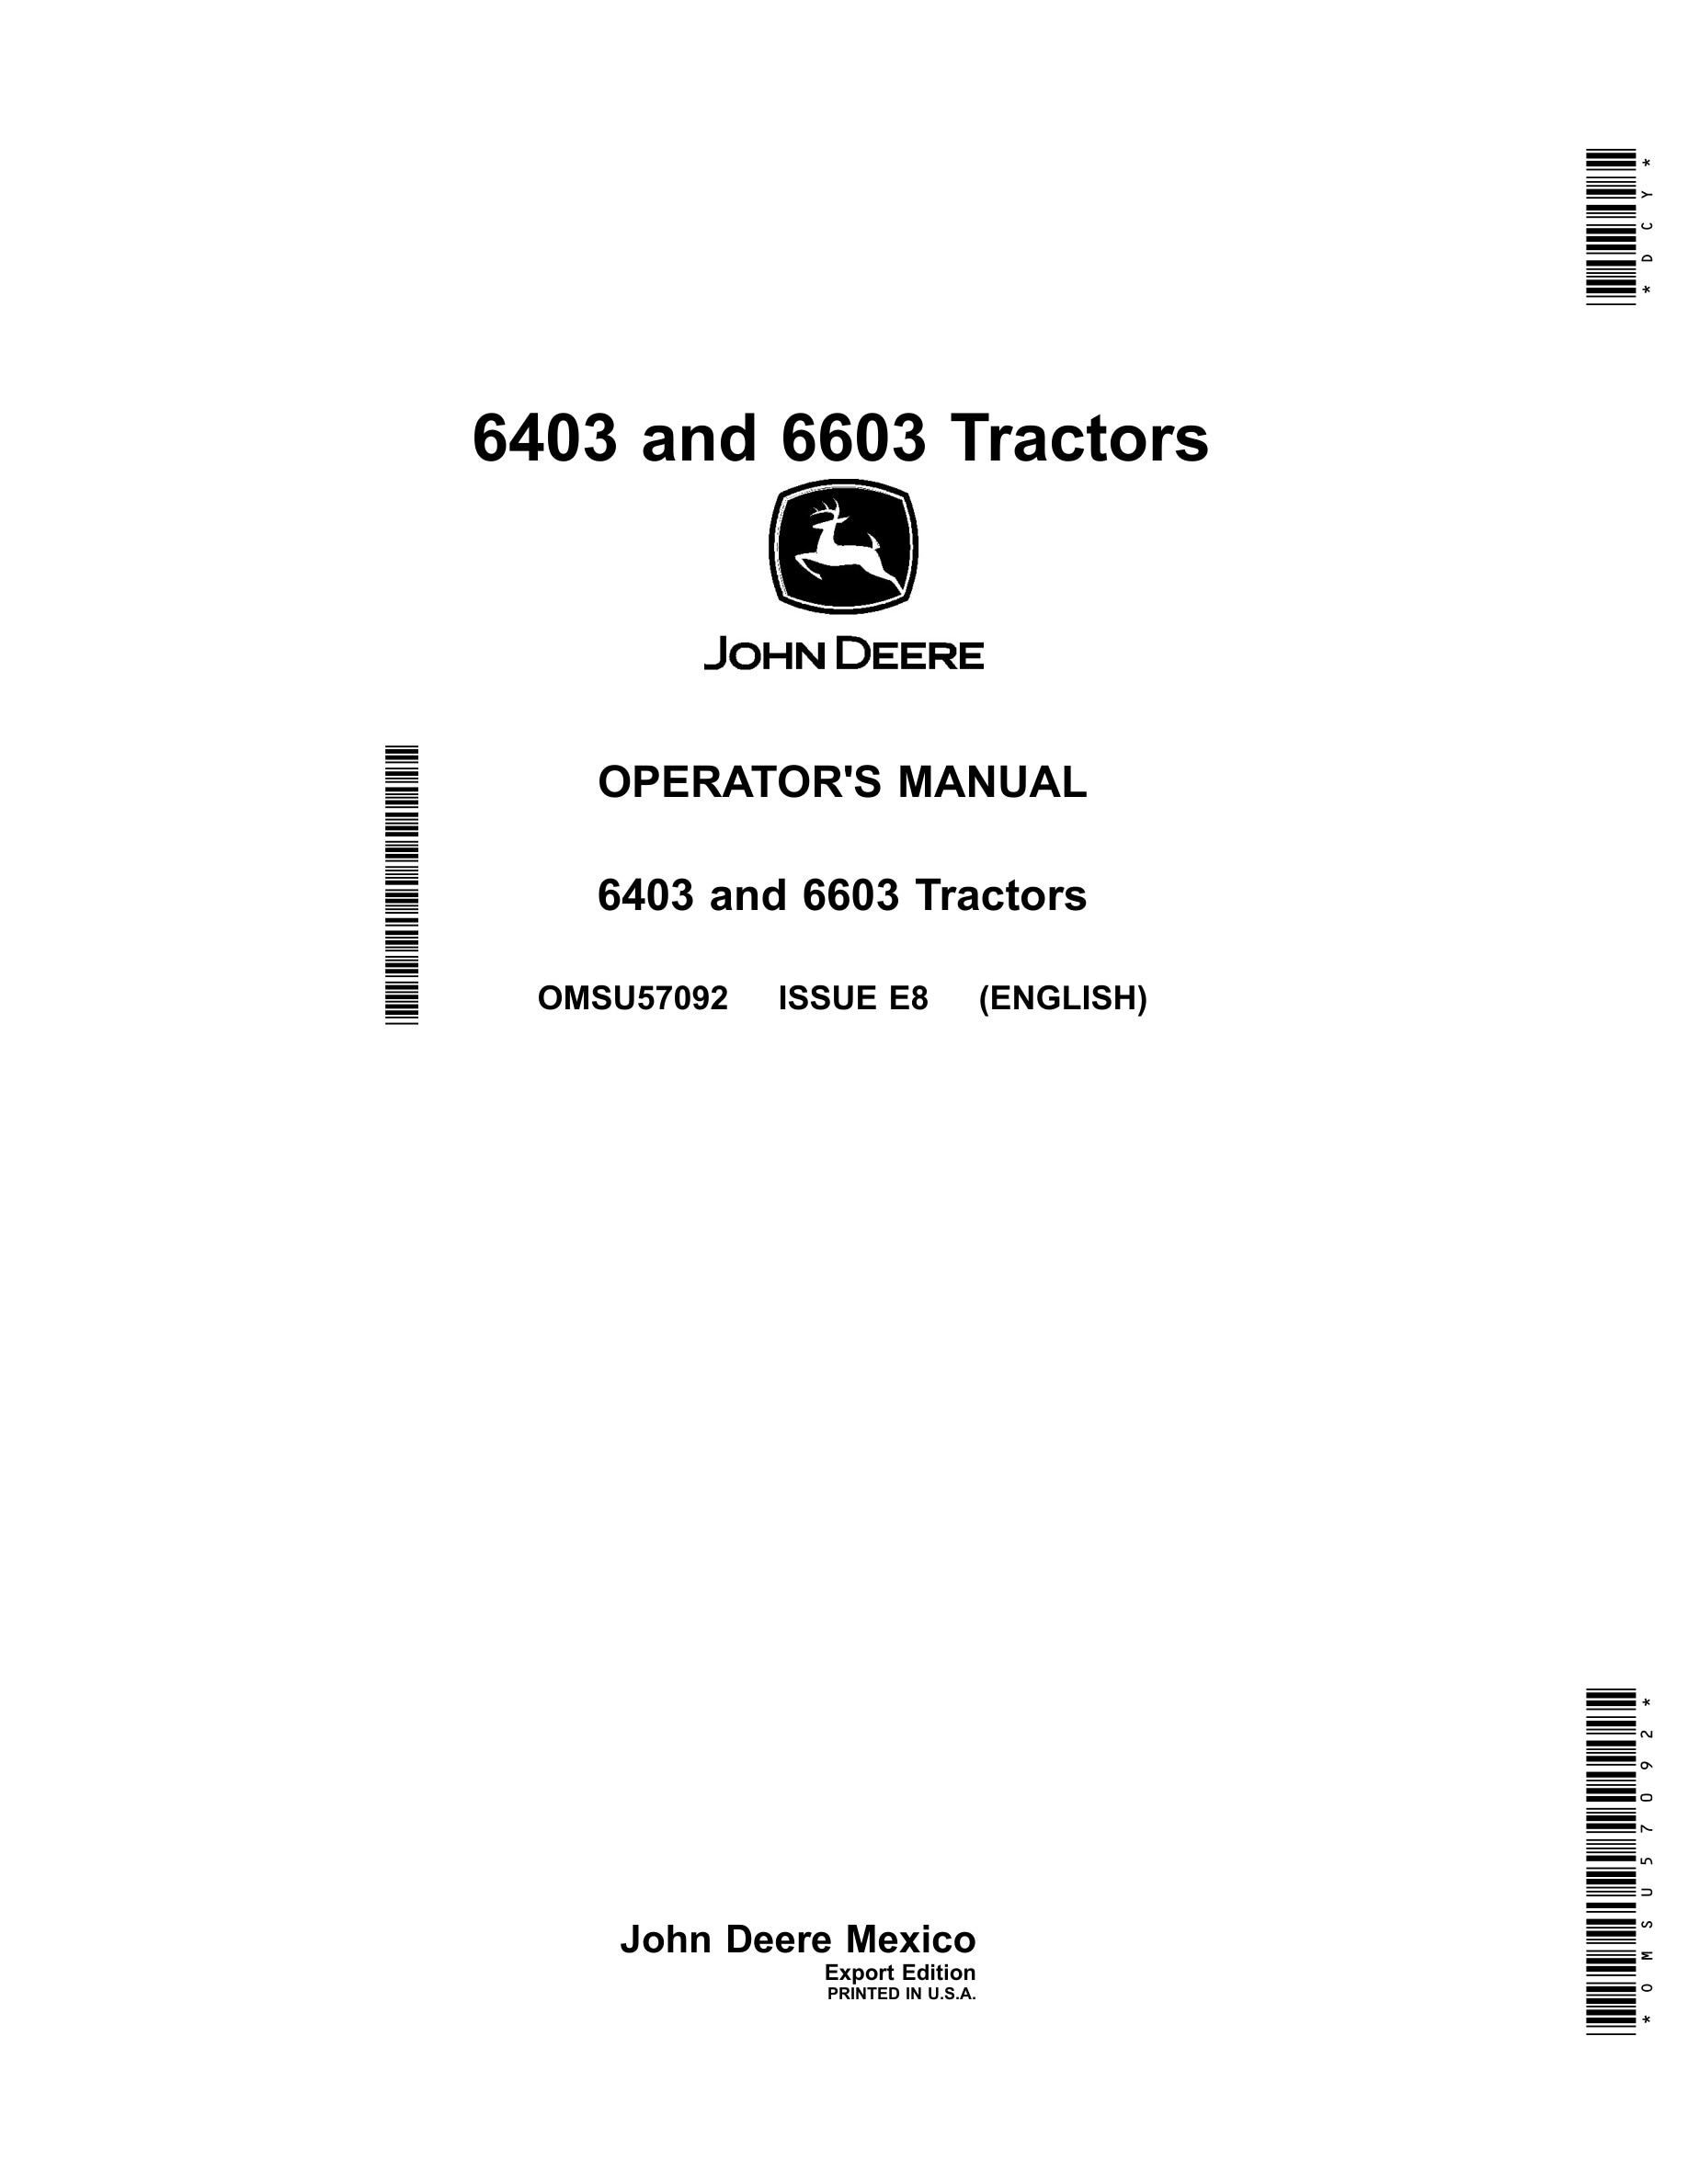 John Deere 6403 And 6603 Tractors Operator Manuals OMSU57092-1